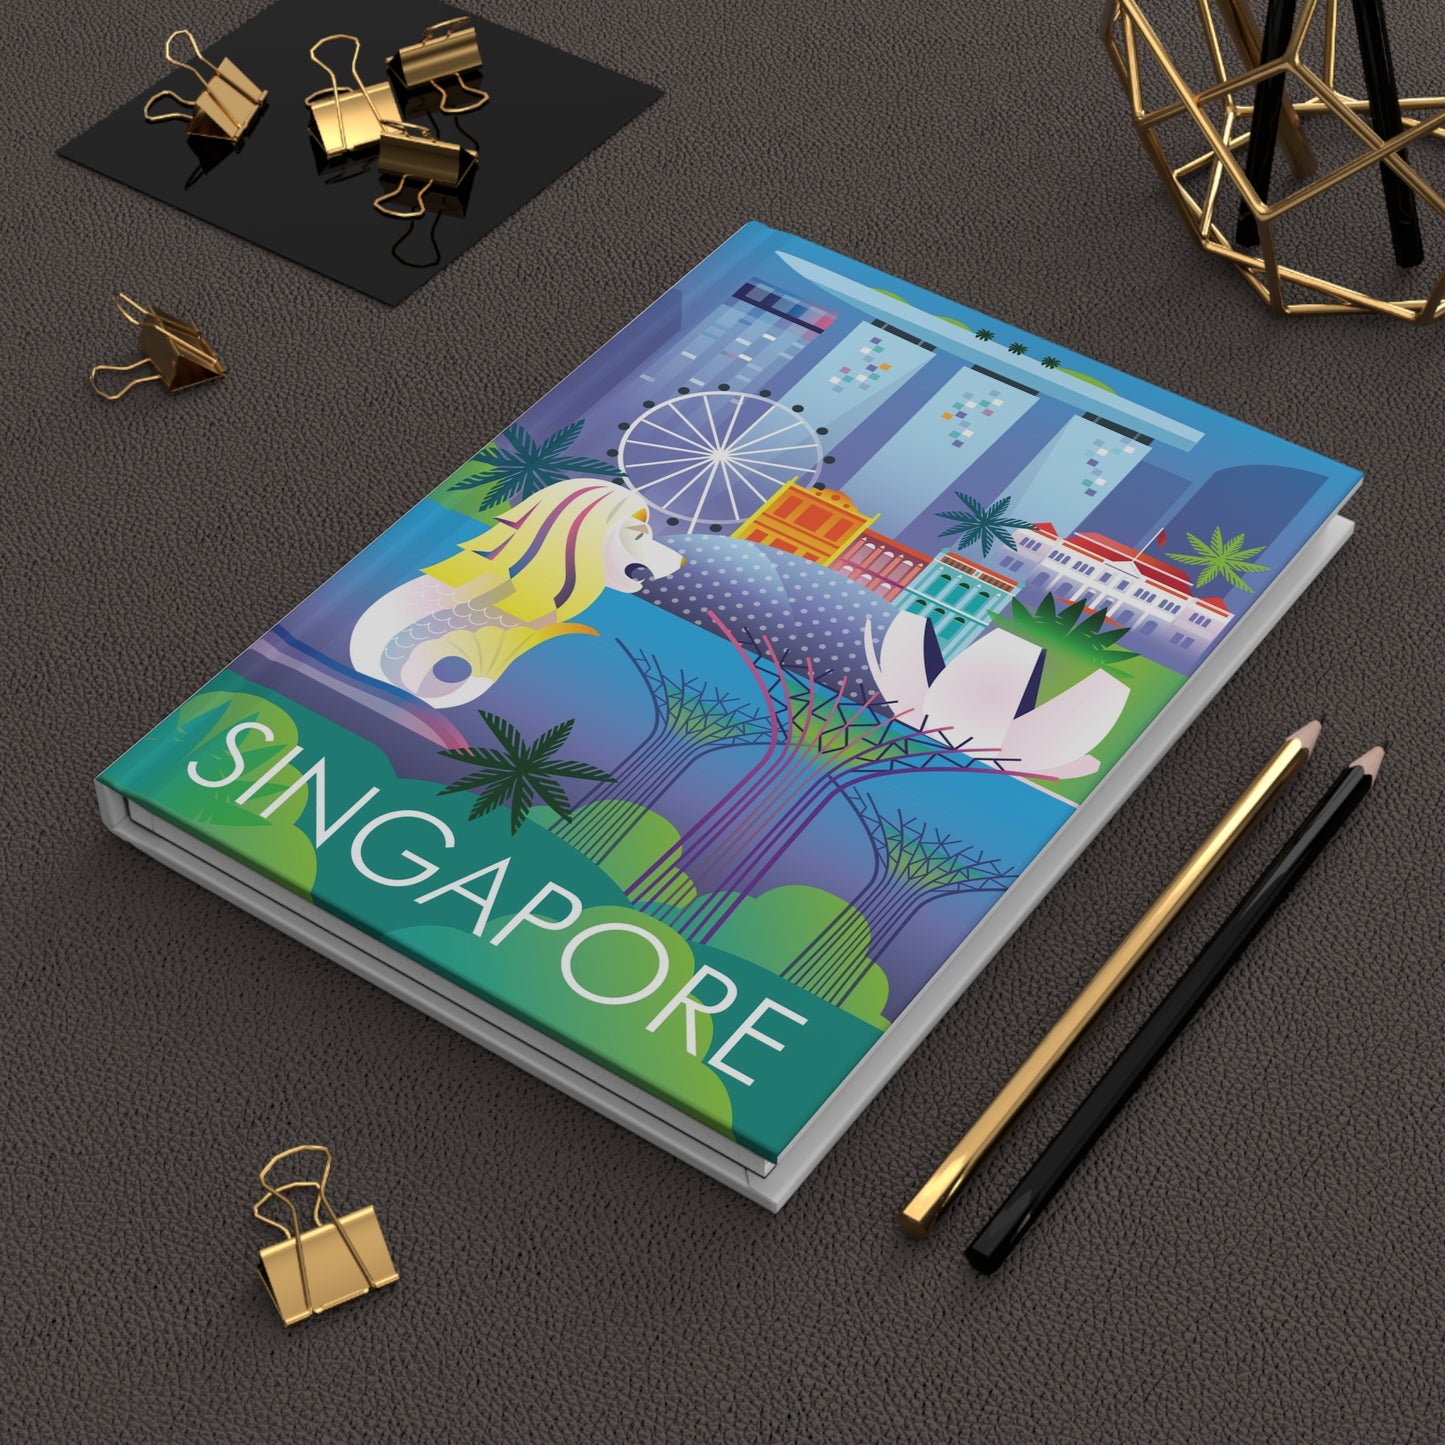 Singapore Hardcover Journal